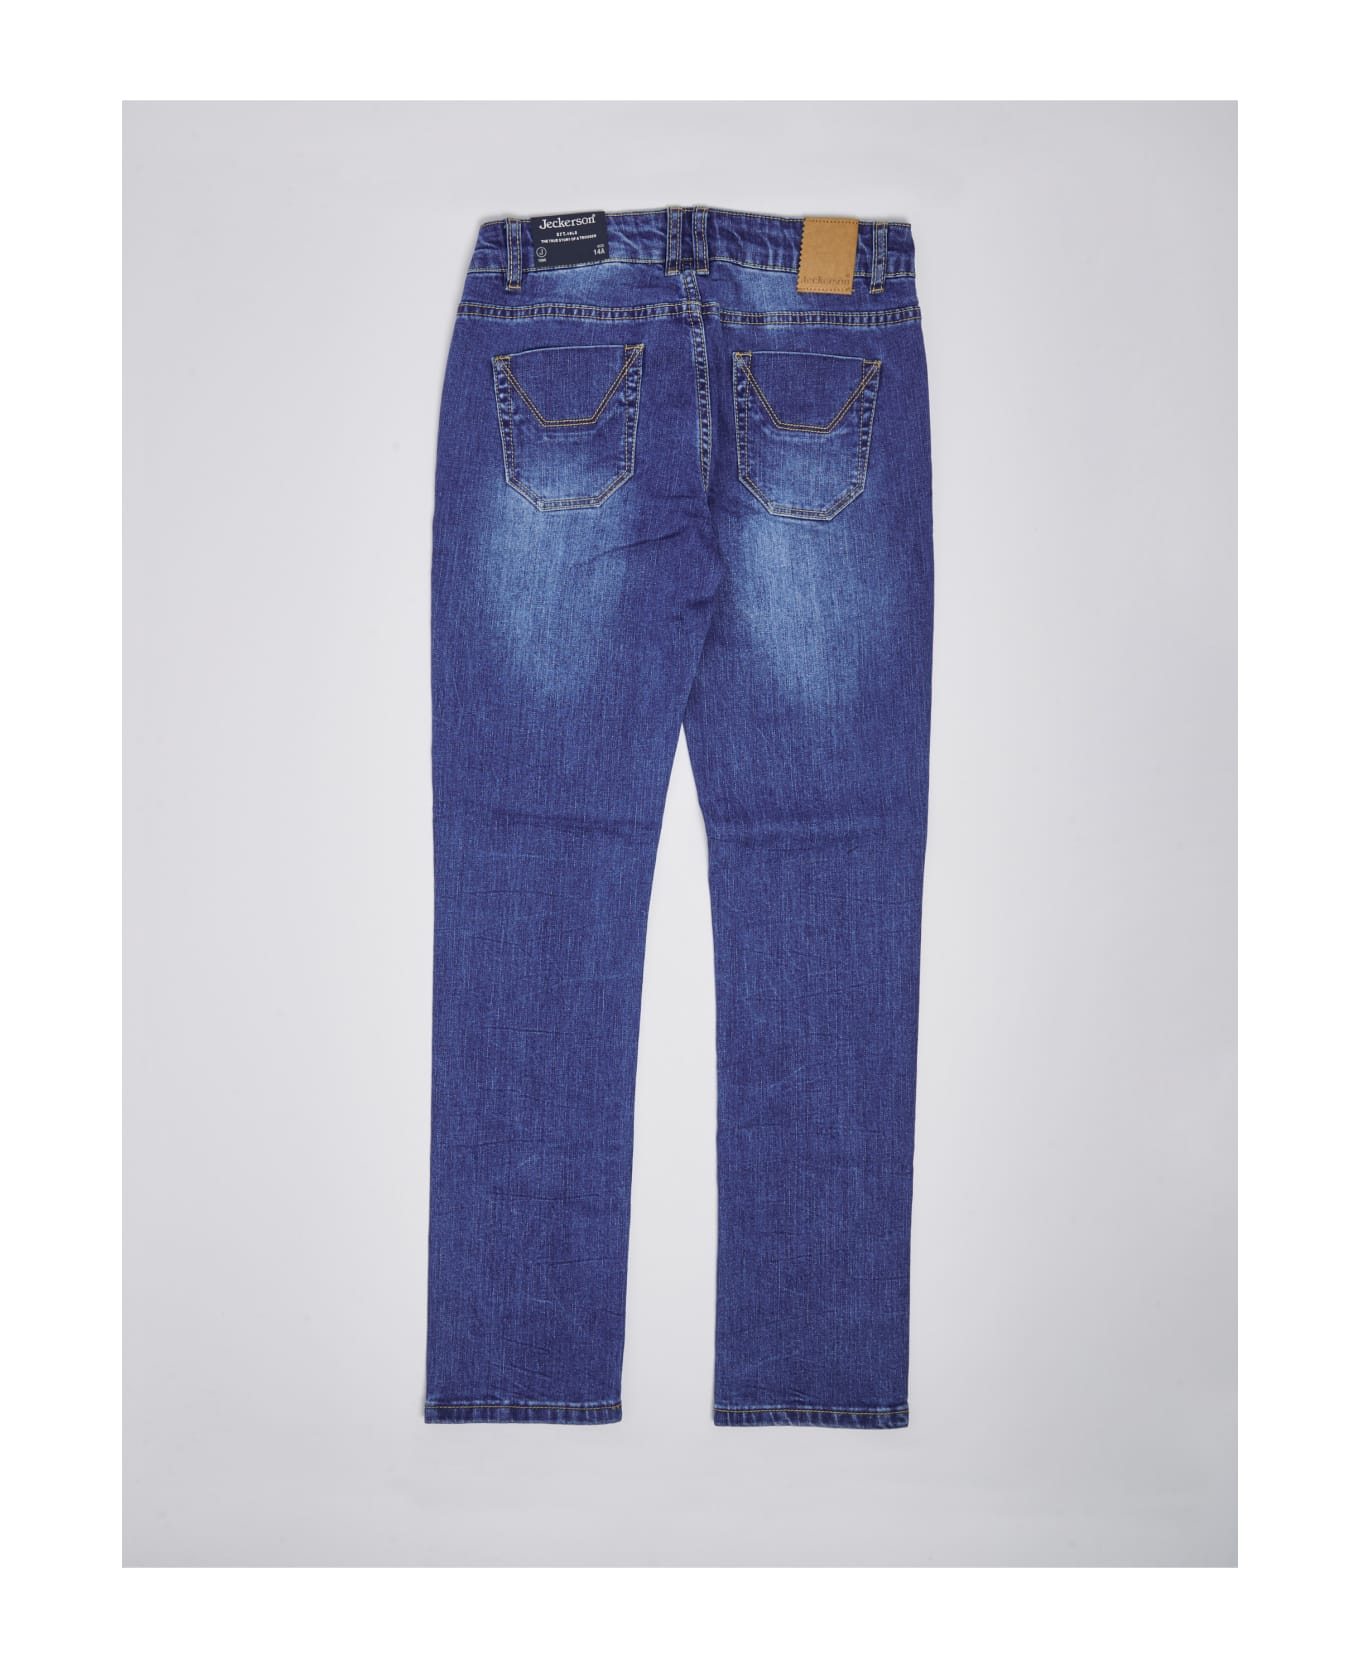 Jeckerson Jeans Jeans - DENIM MEDIO